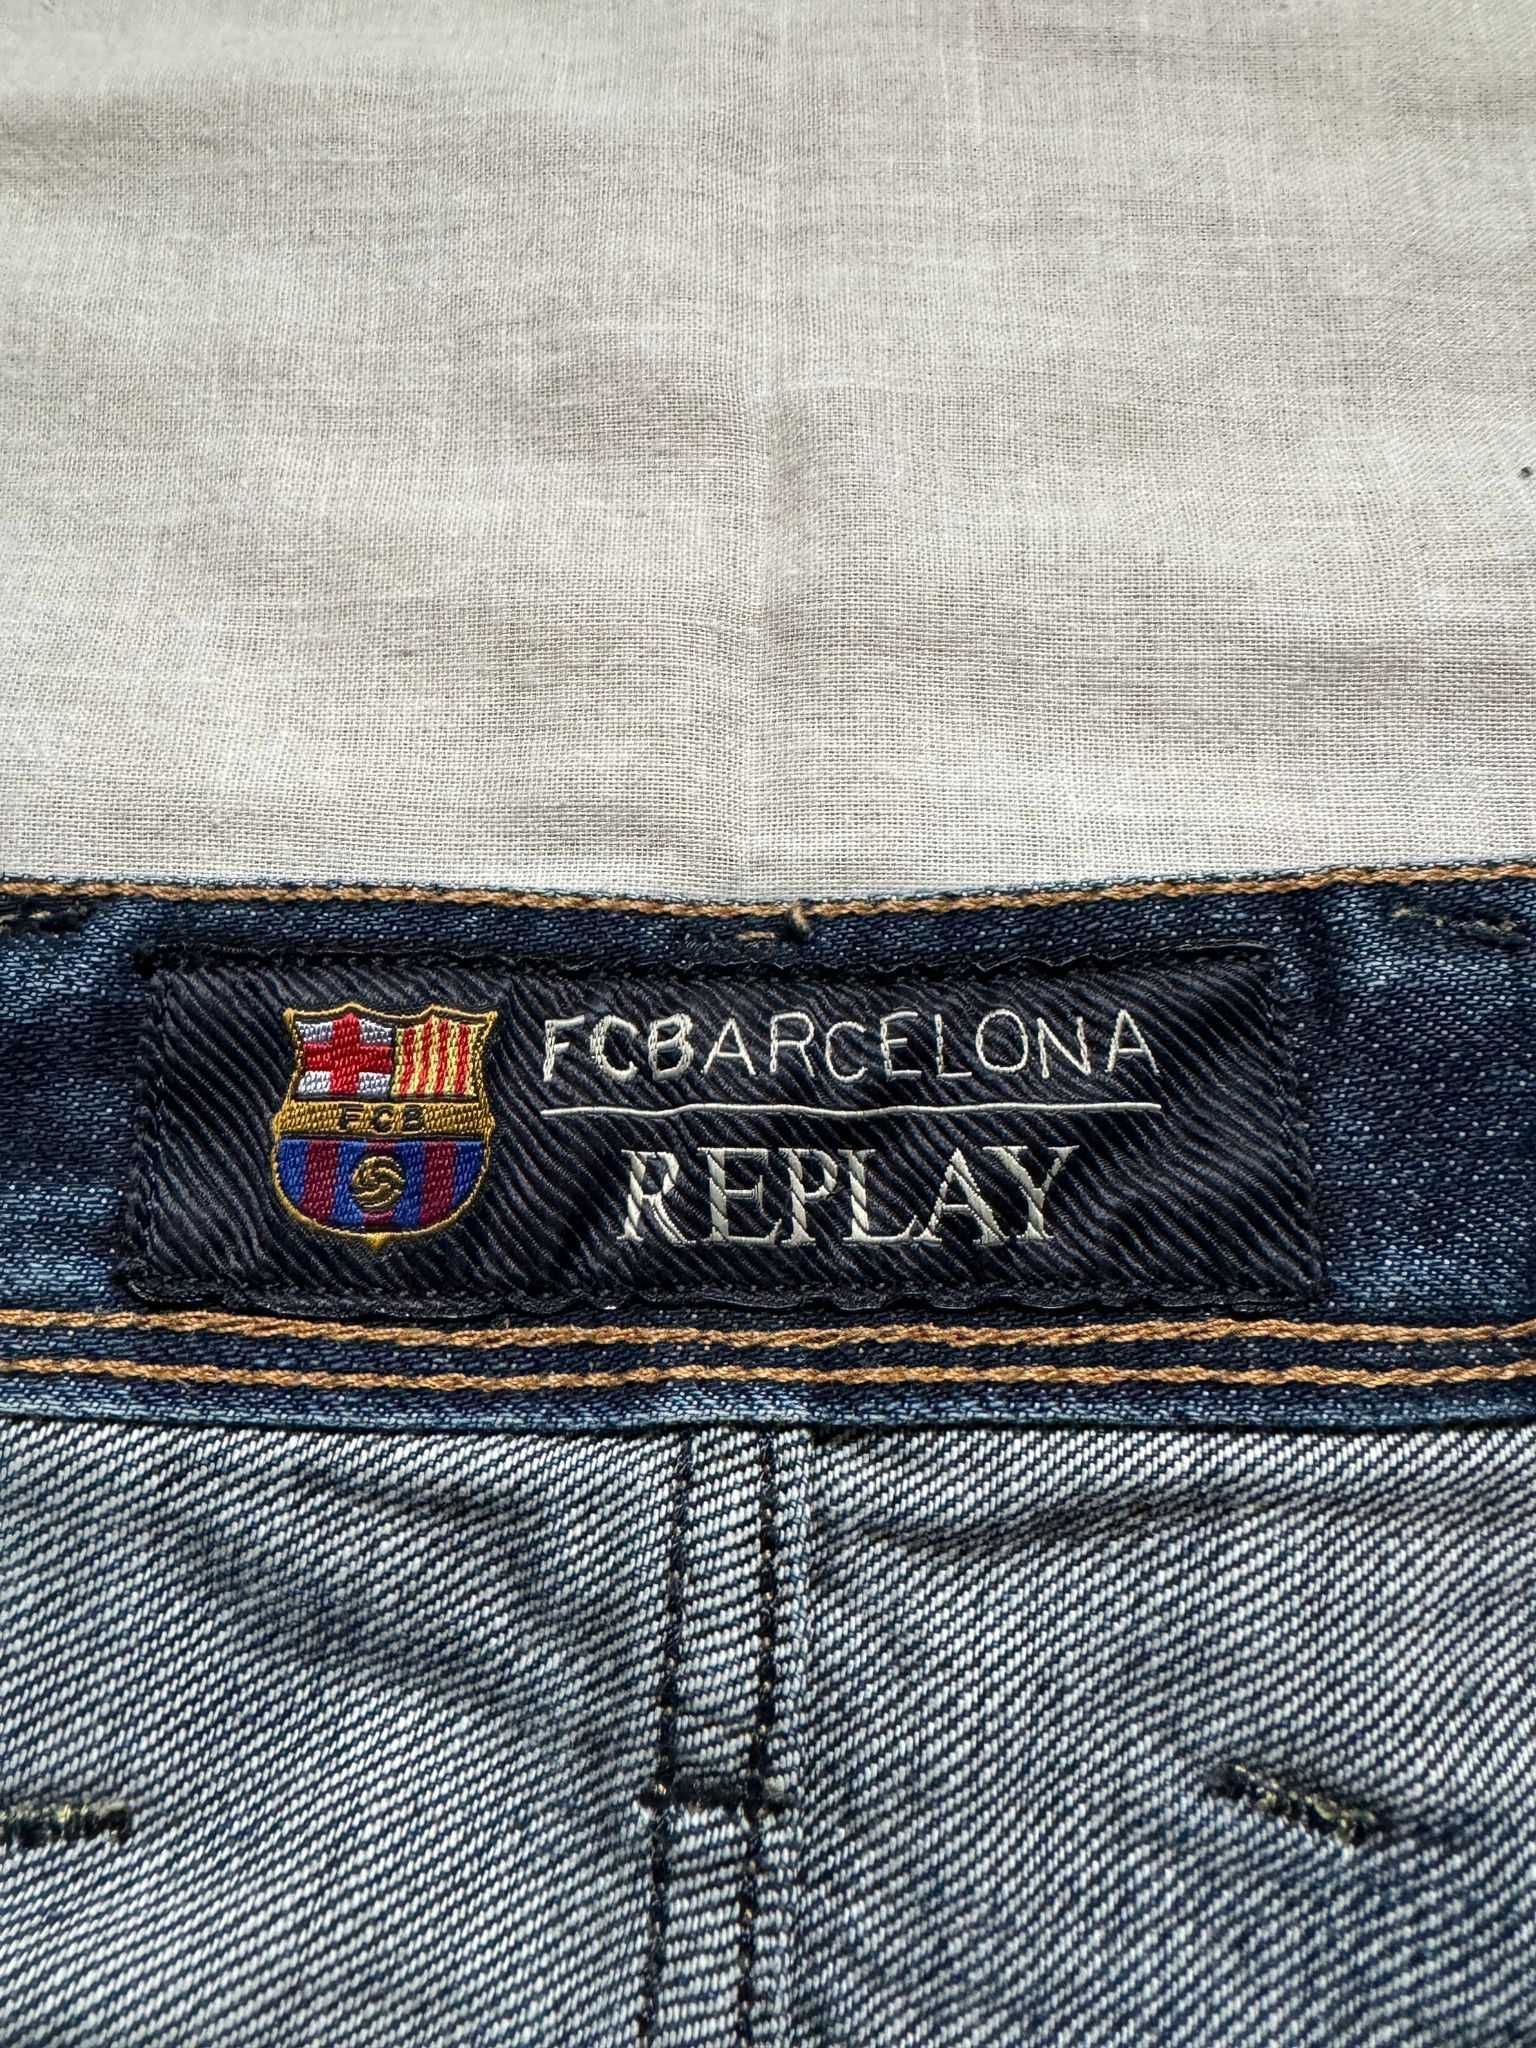 REAPLAY x FC Barcelona, blugi barbati, W31, talie 40cm